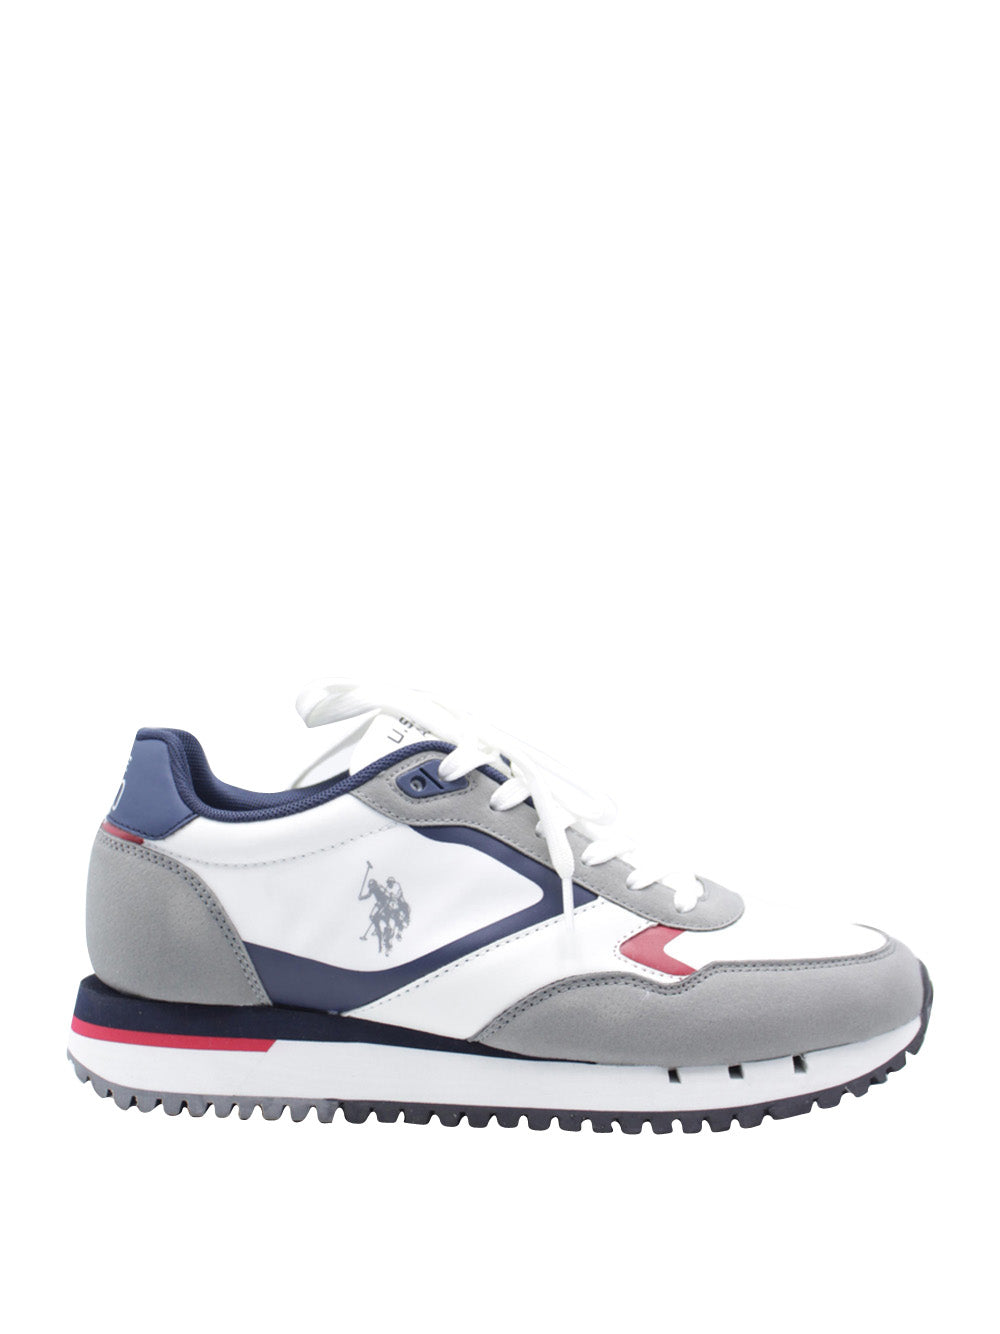 U.S. POLO ASSN. Sneakers Uomo - Bianco modello JUSTIN001